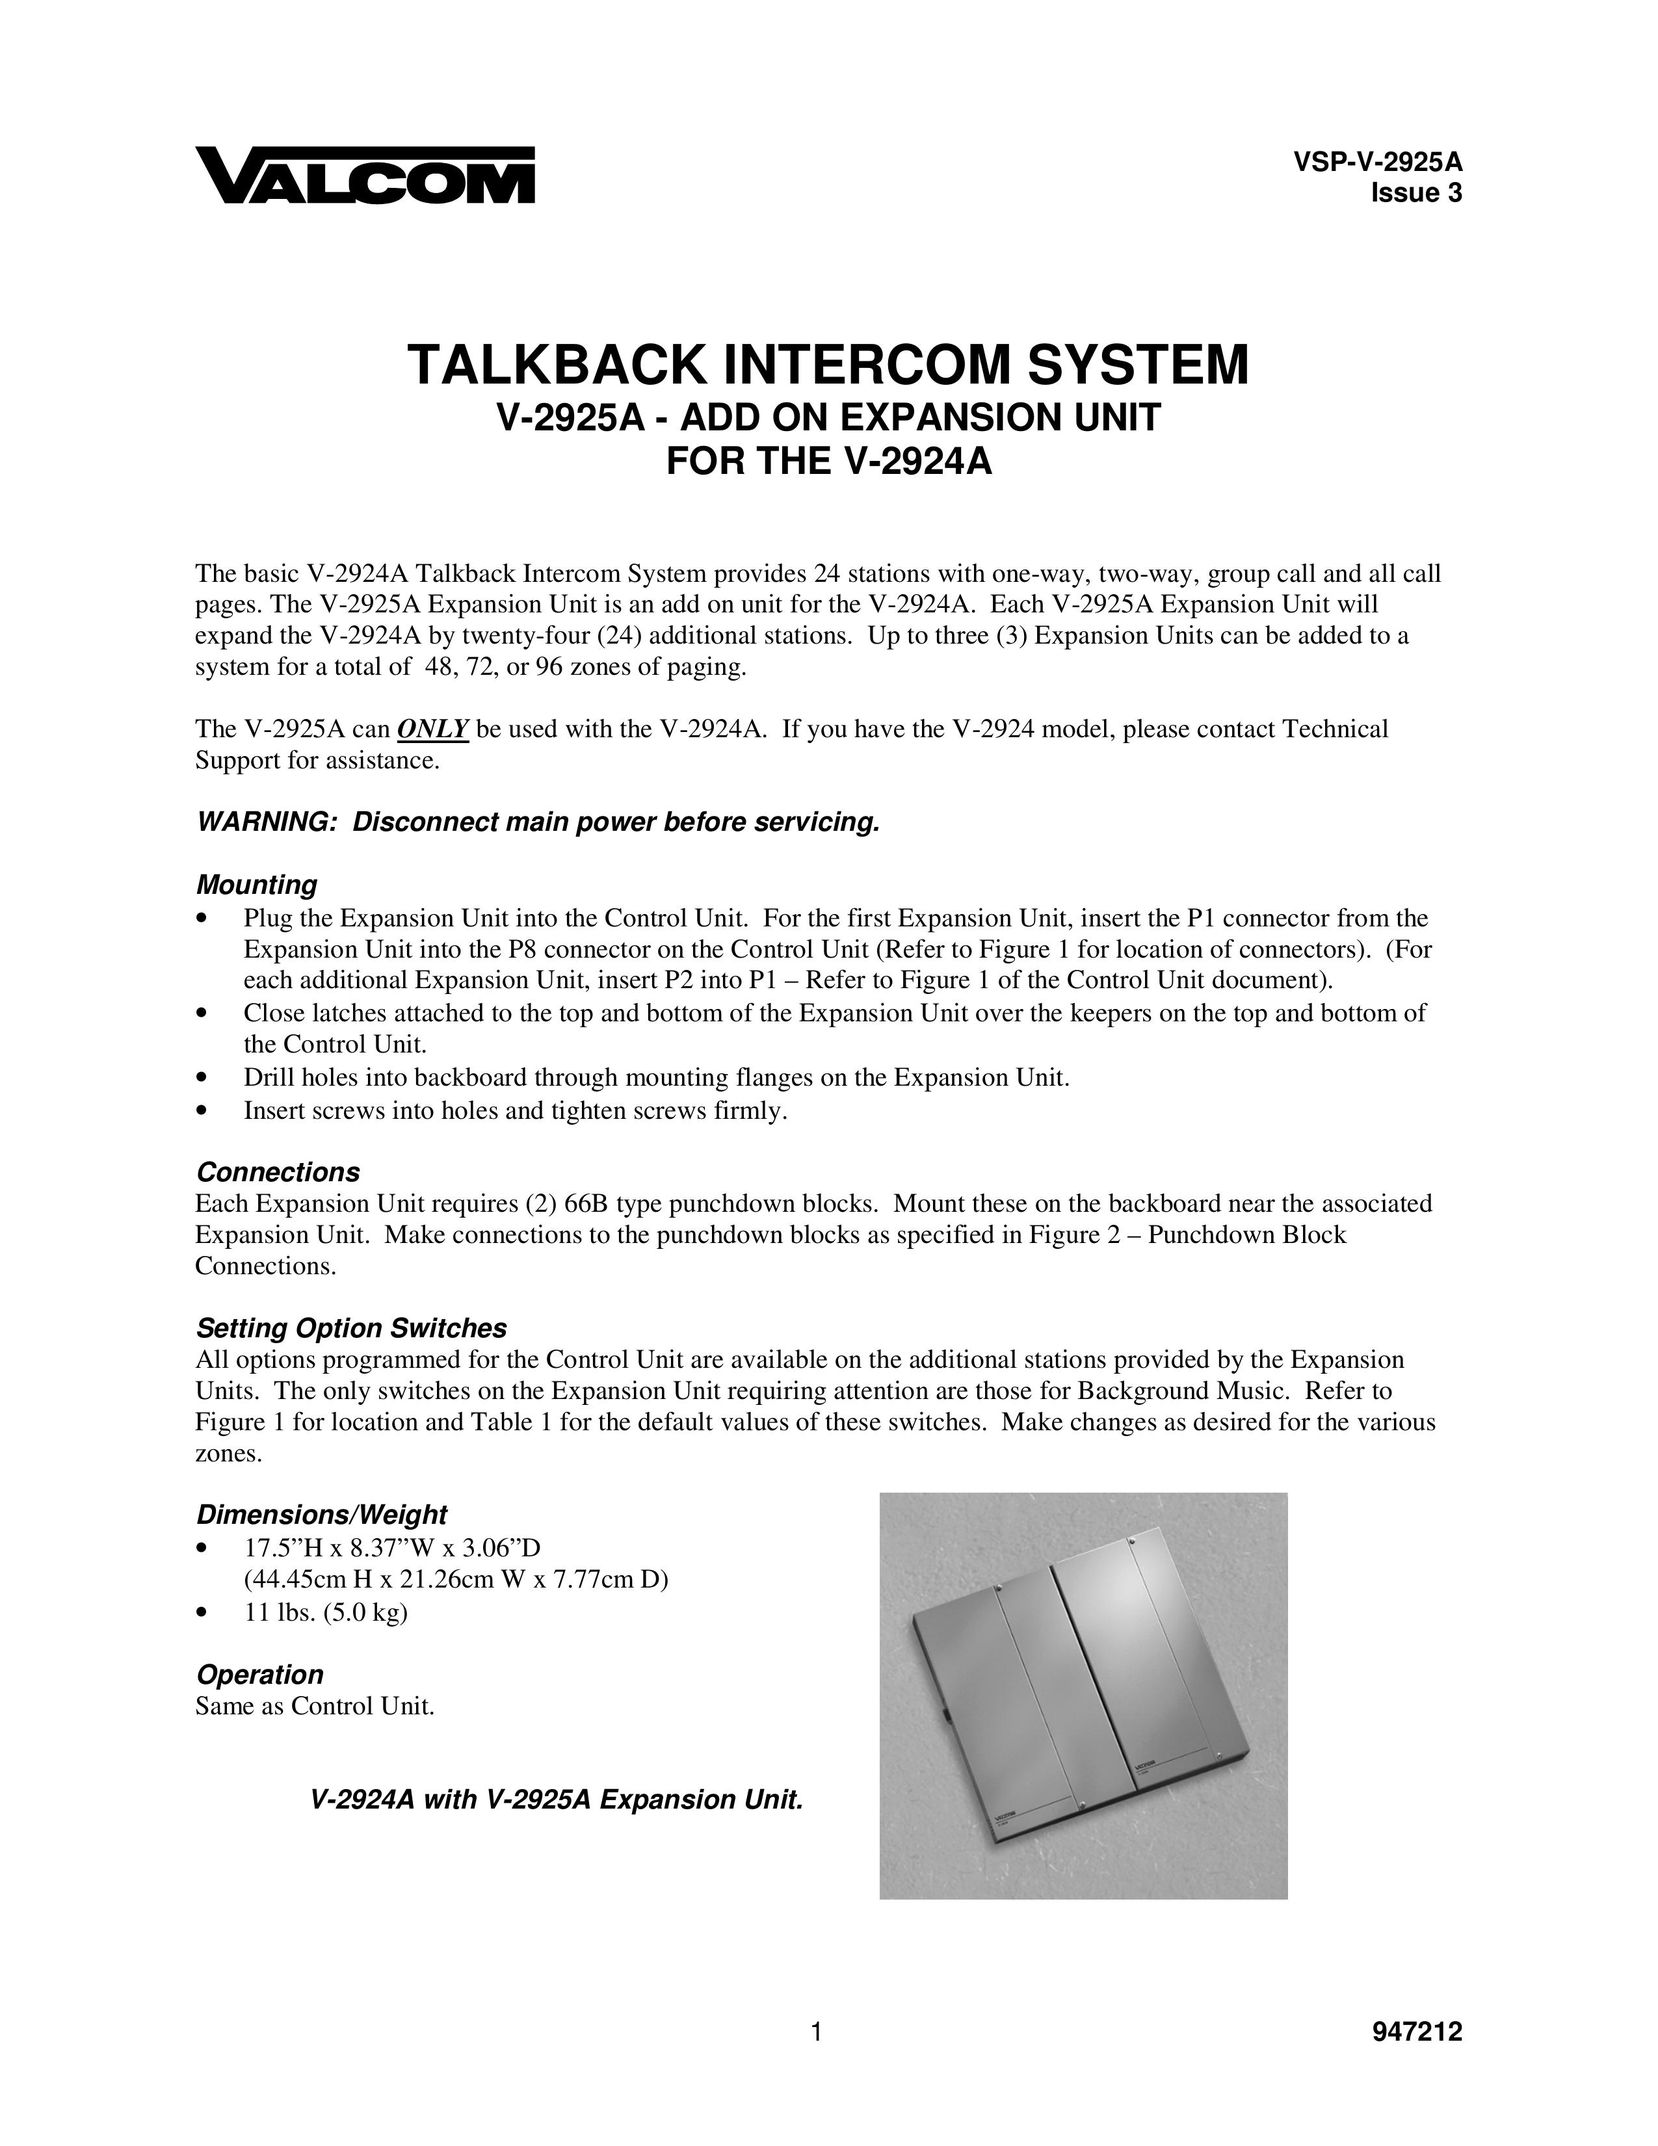 Valcom VSP-V-2925A Intercom System User Manual